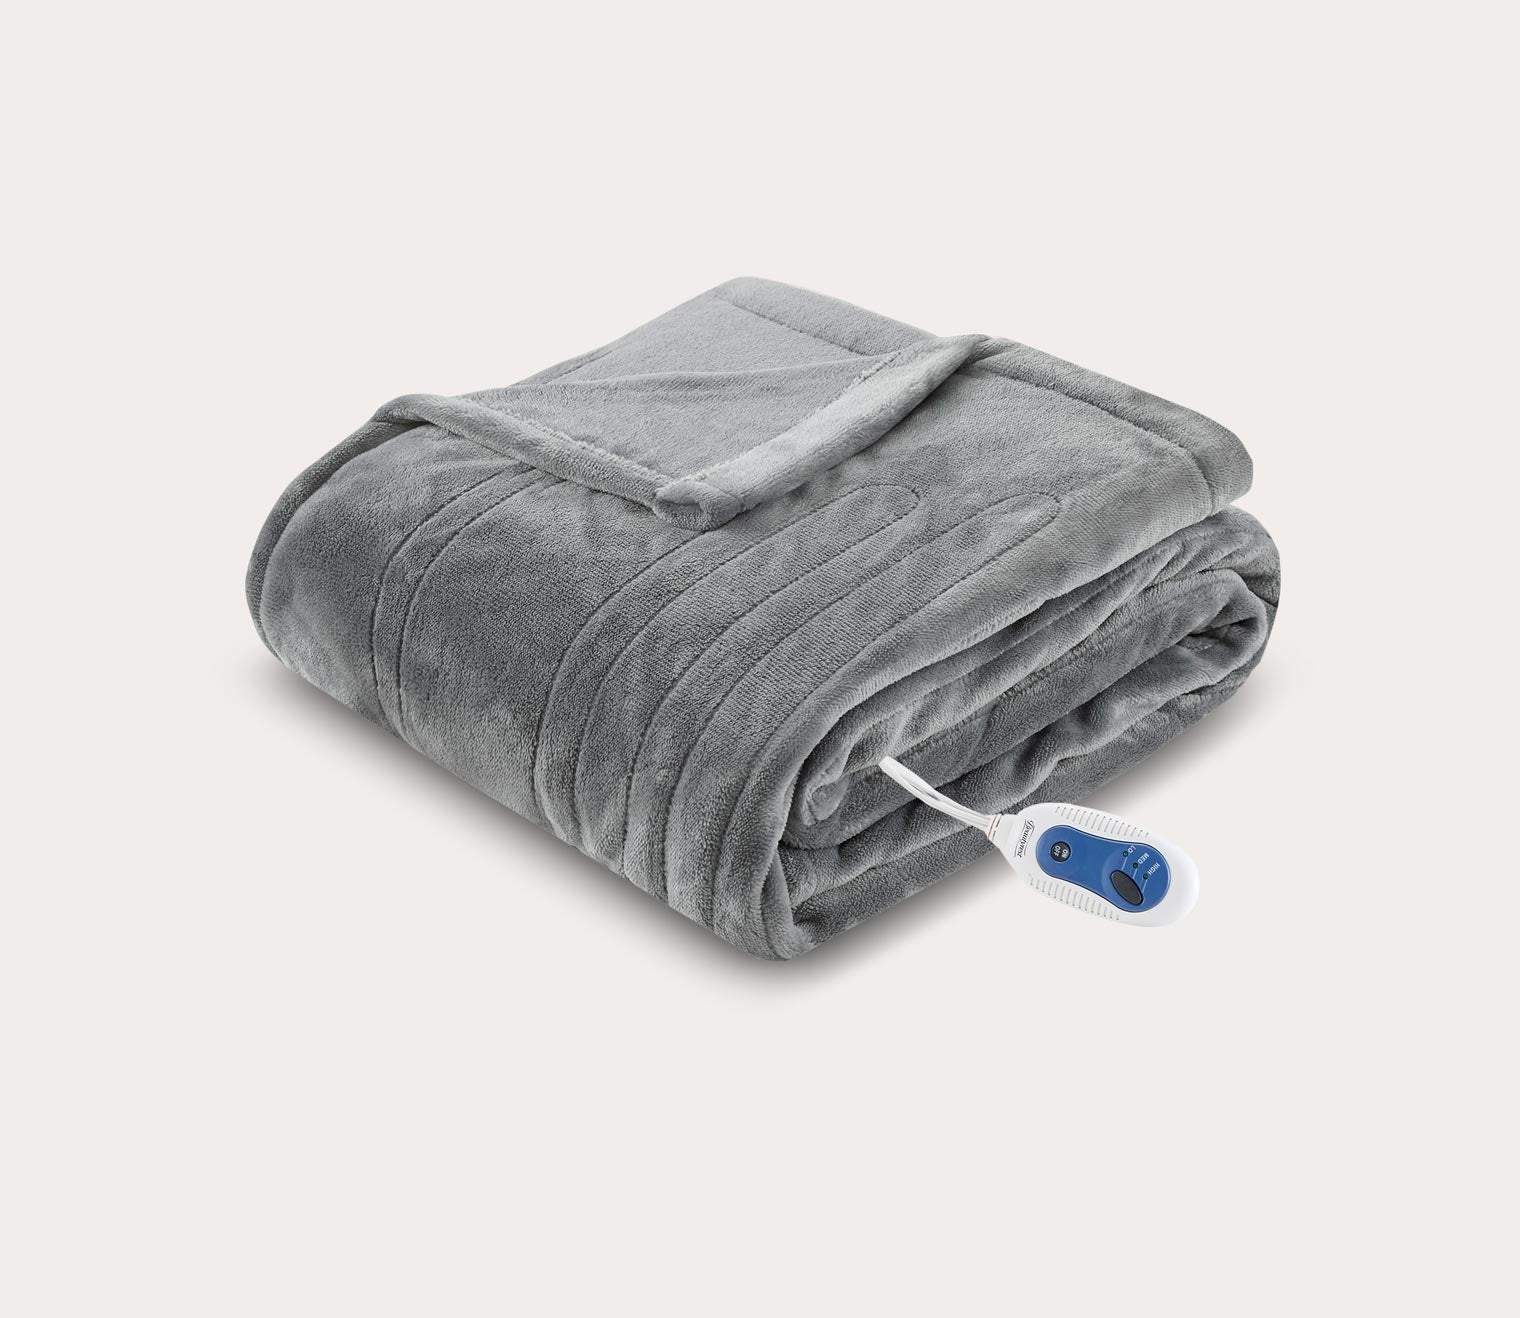 Zuri Oversized Heated Faux Fur Throw Blanket by Beautyrest